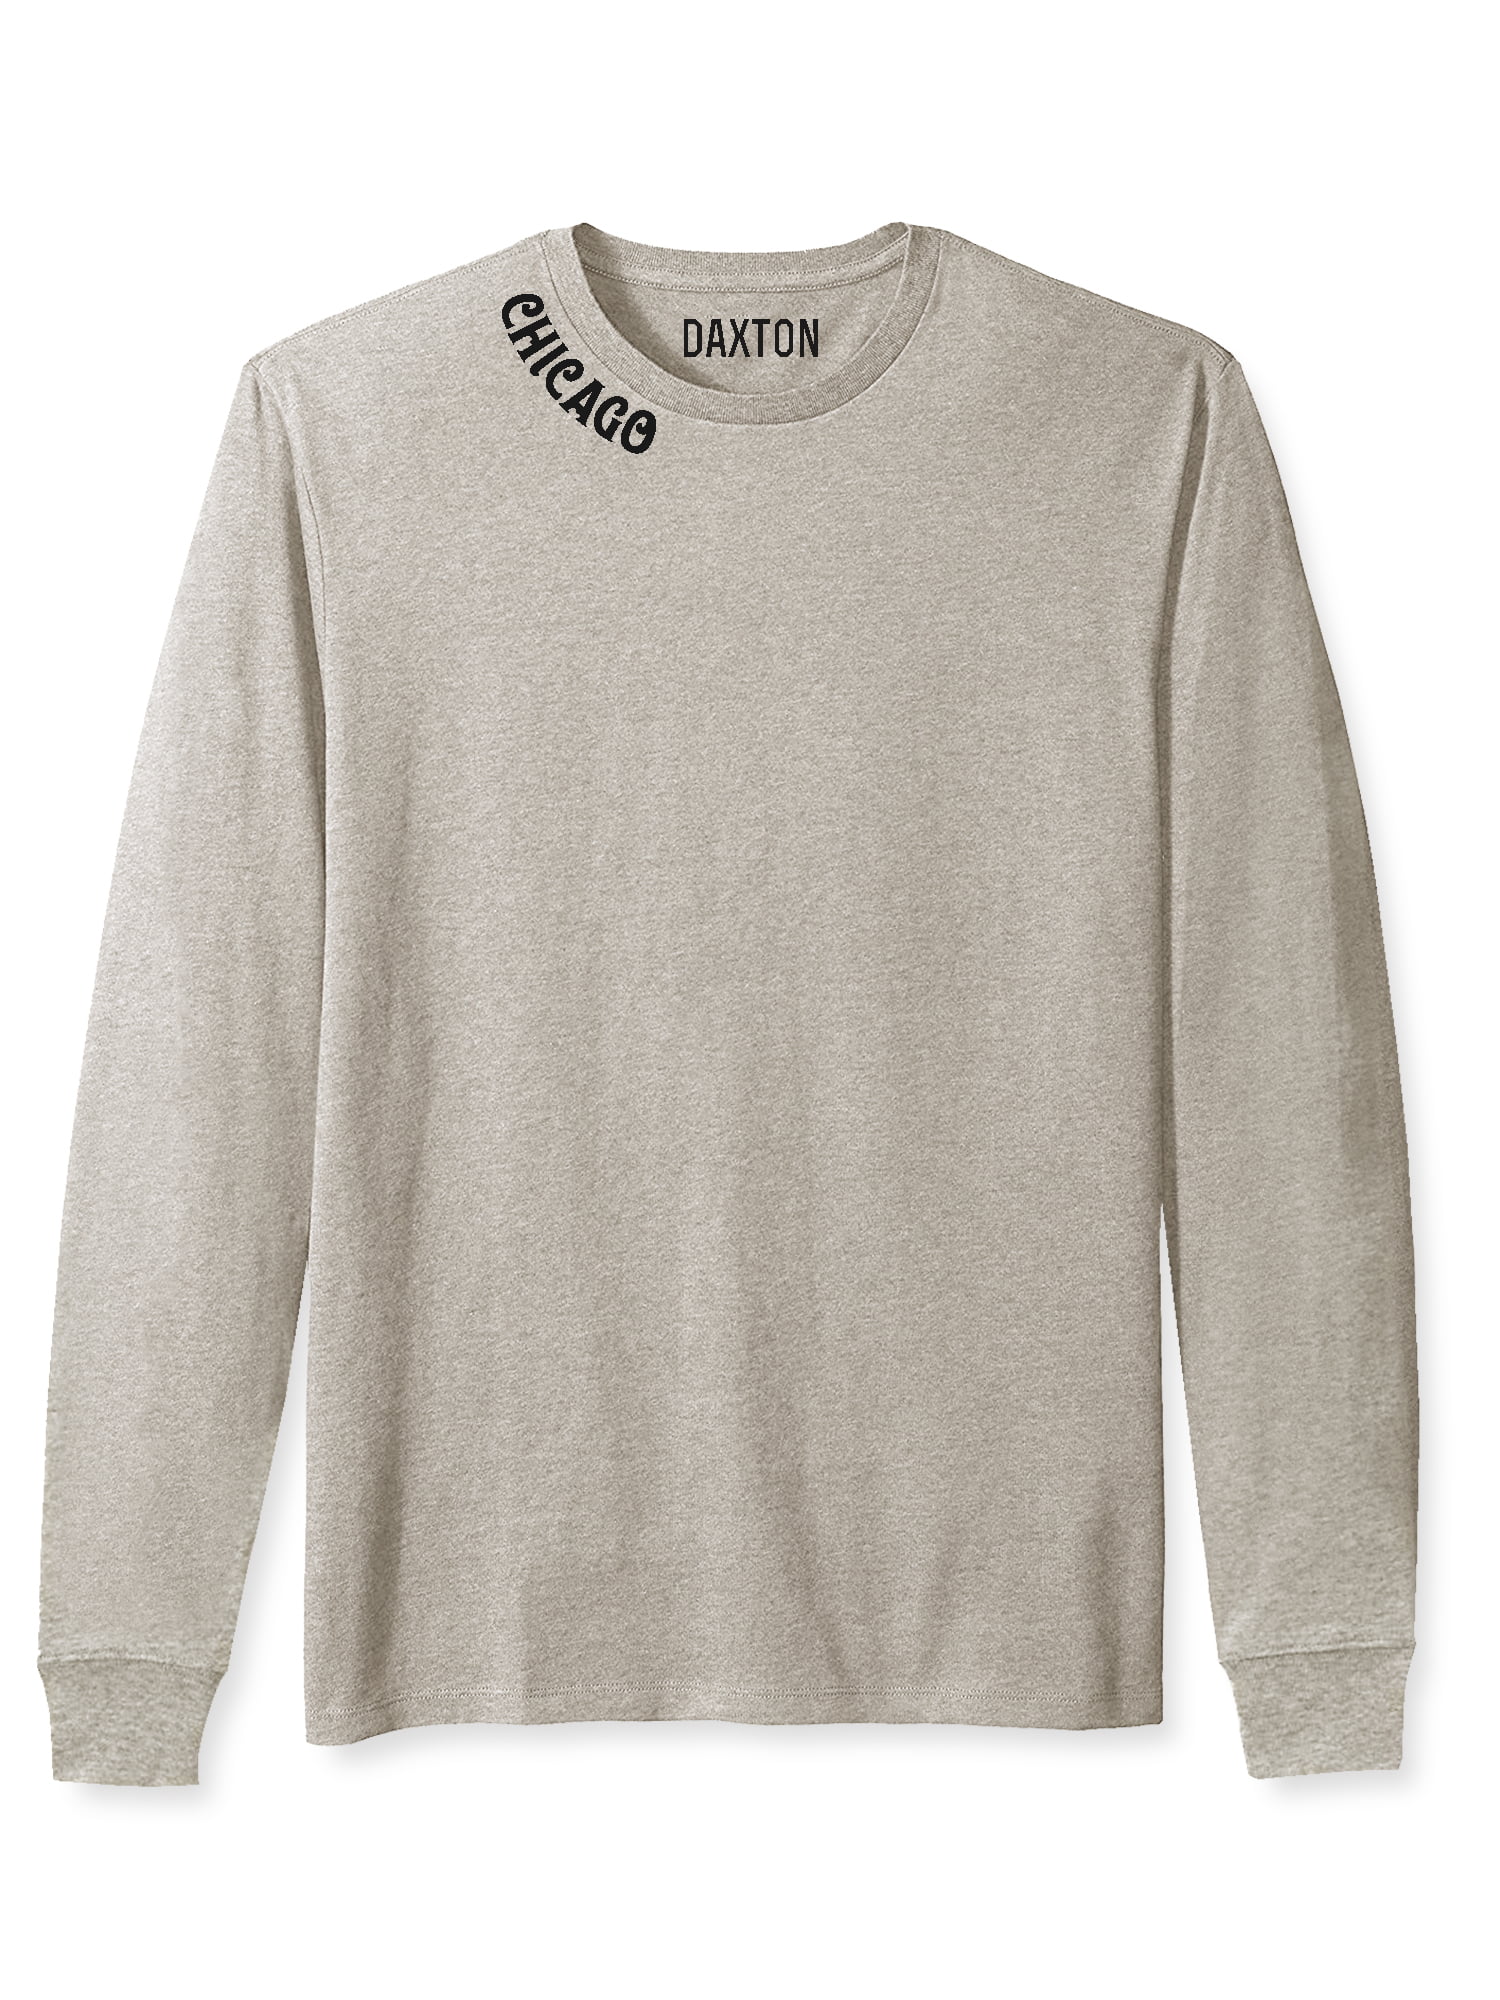 Daxton Premium Chicago Men Long Sleeves T Shirt Ultra Soft Medium Weight Cotton 